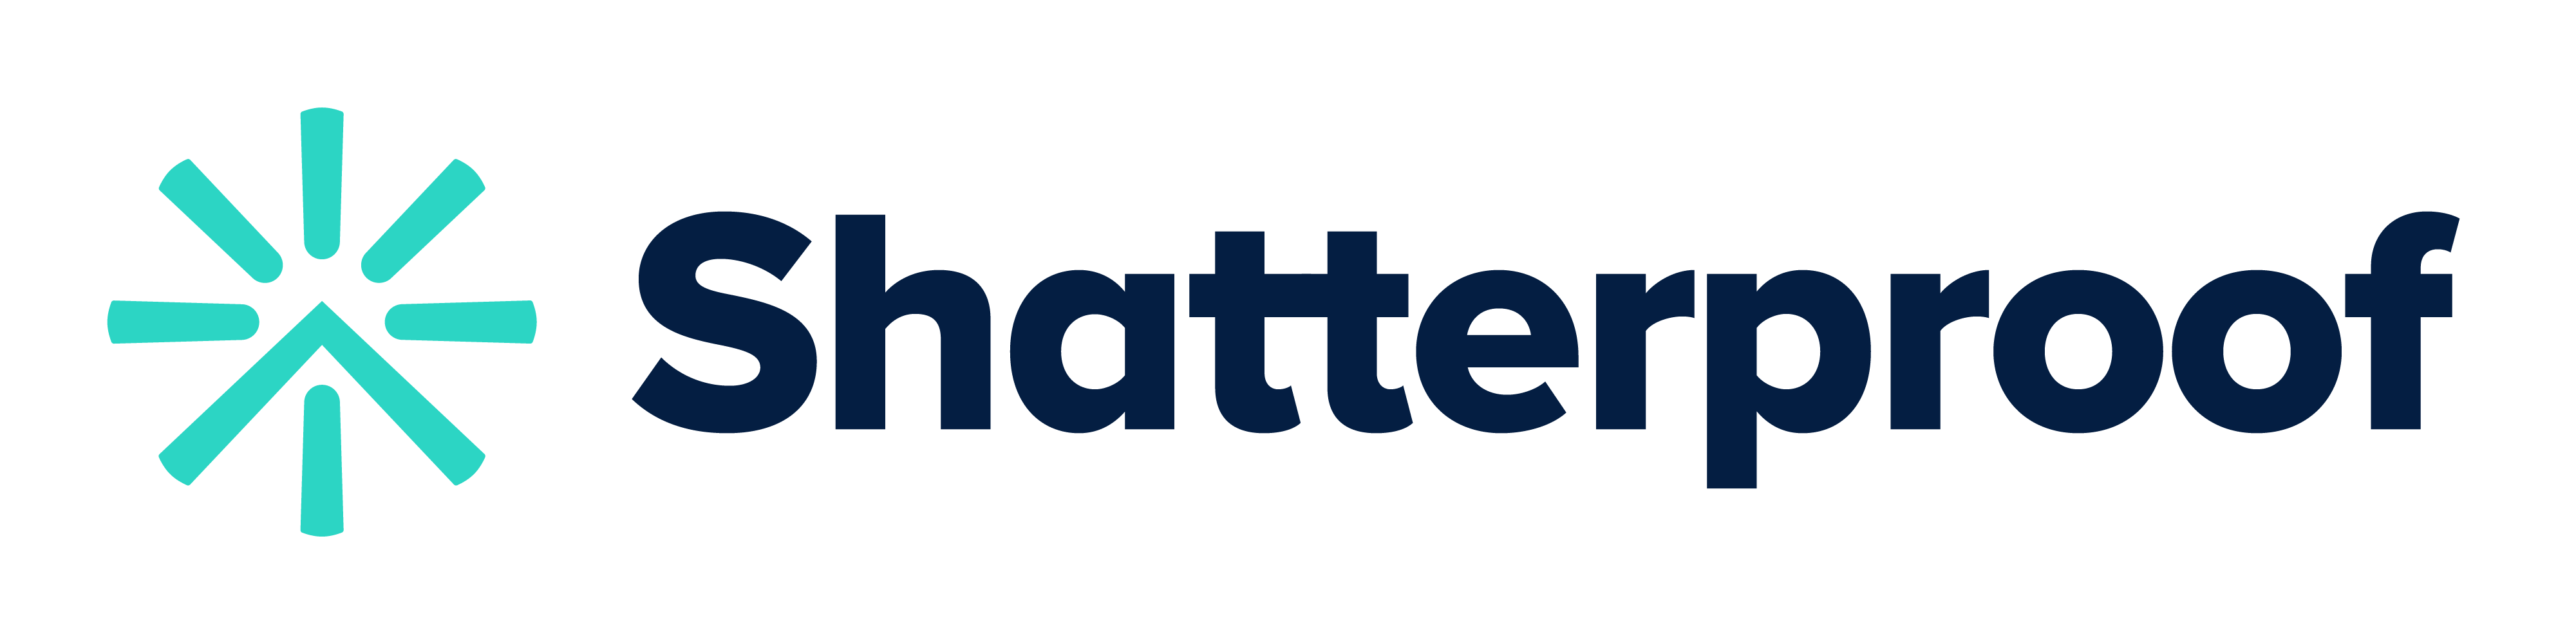 Shatterproof Logo